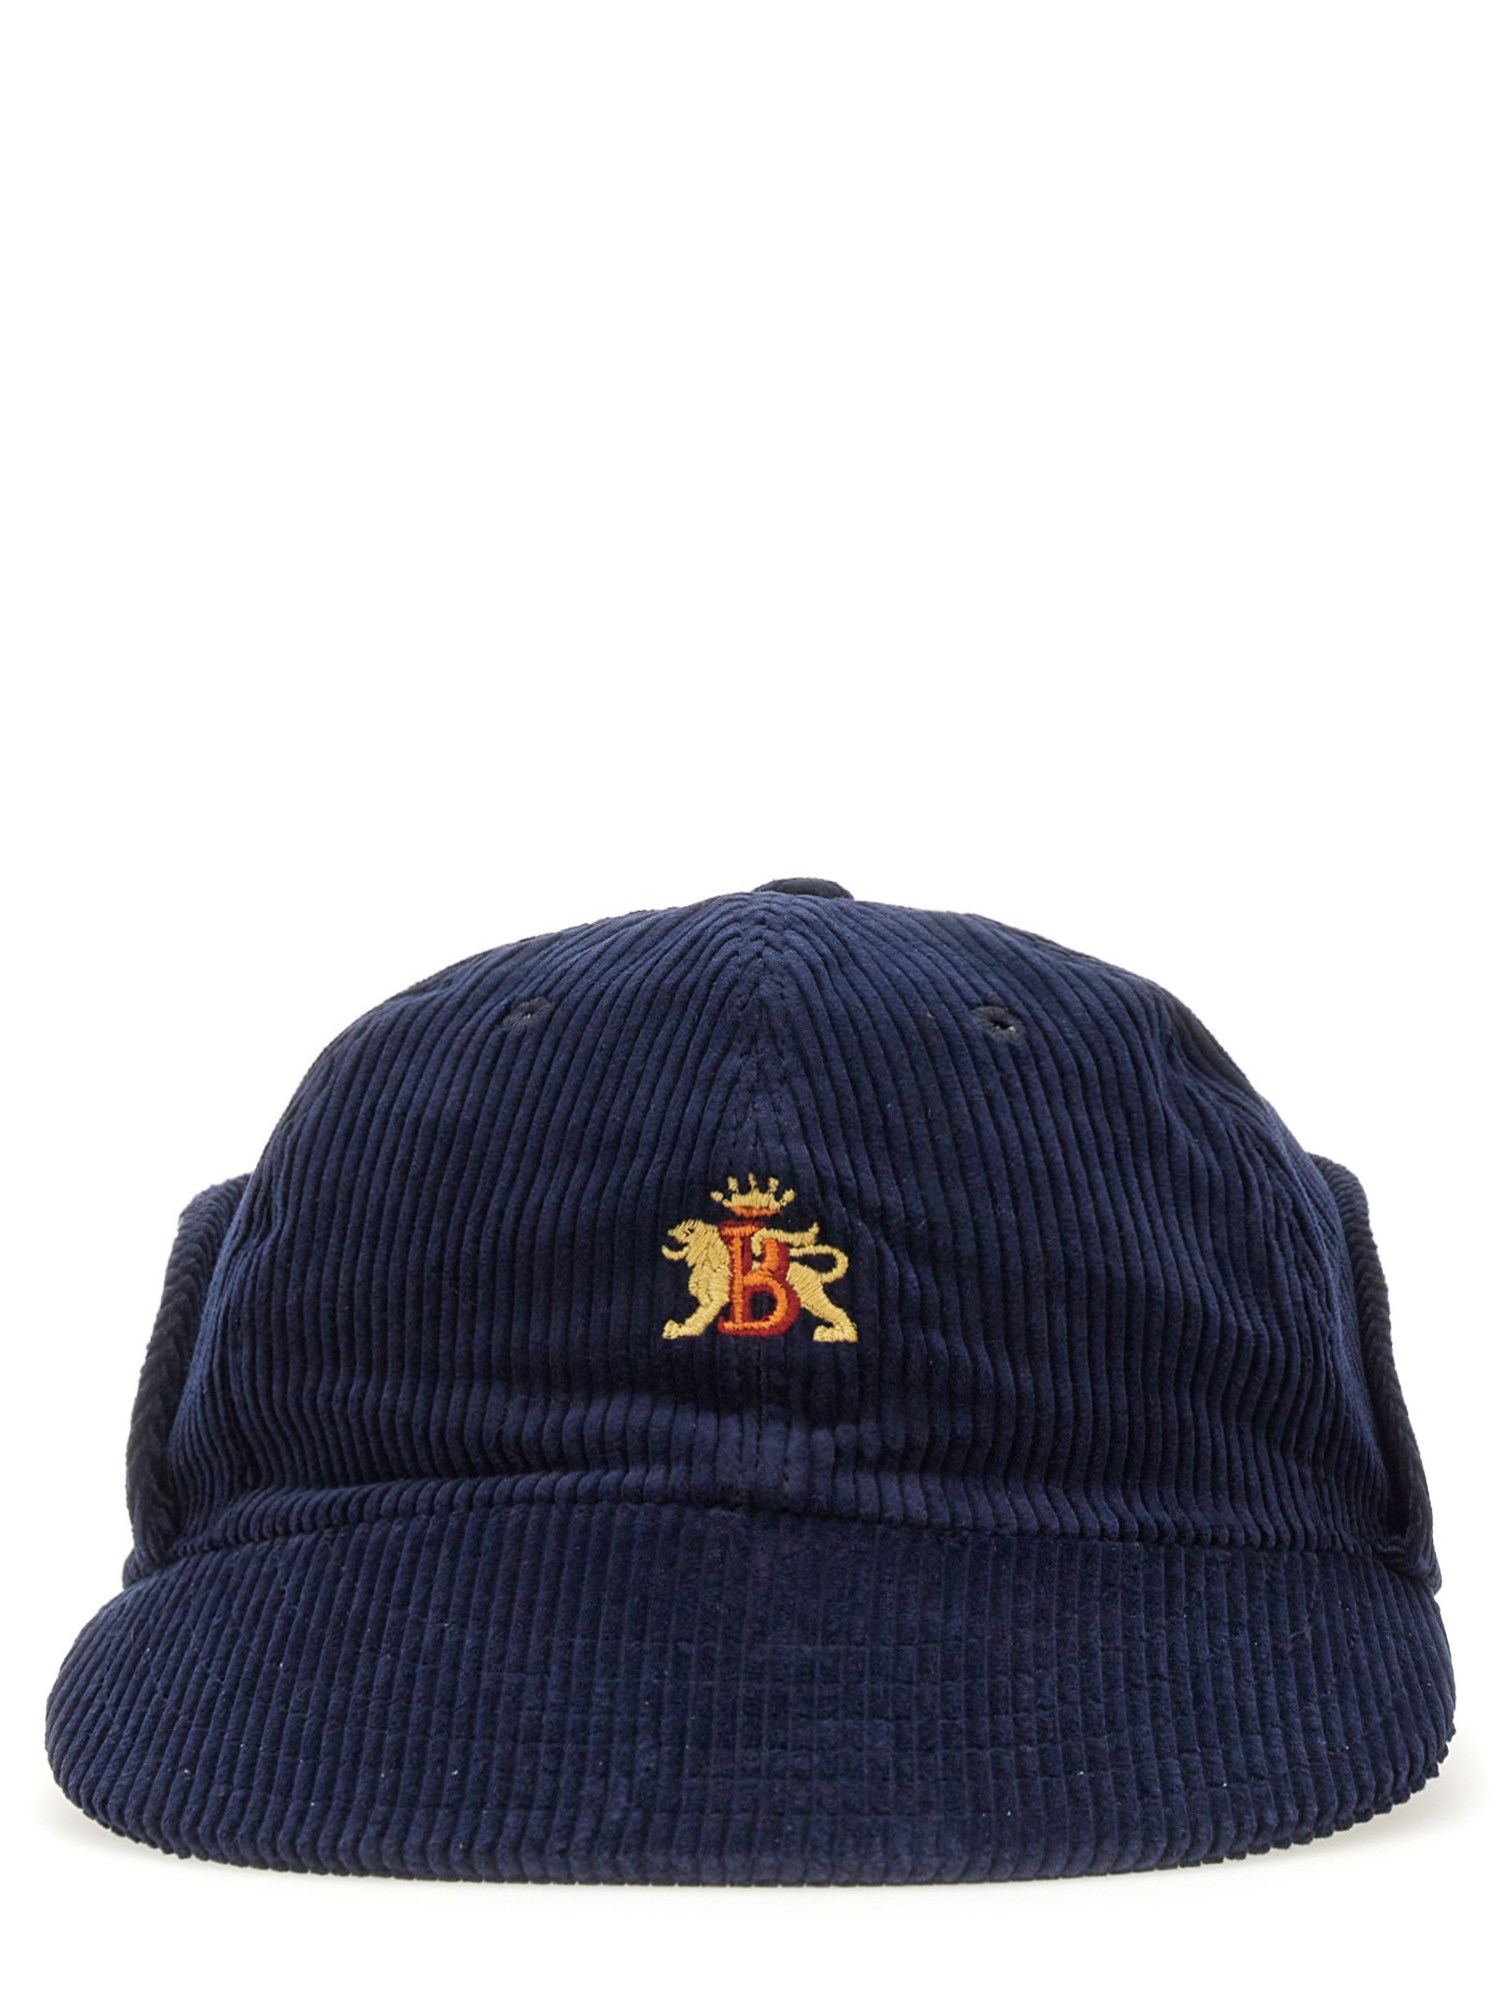 Baracuta baracuta hat with logo